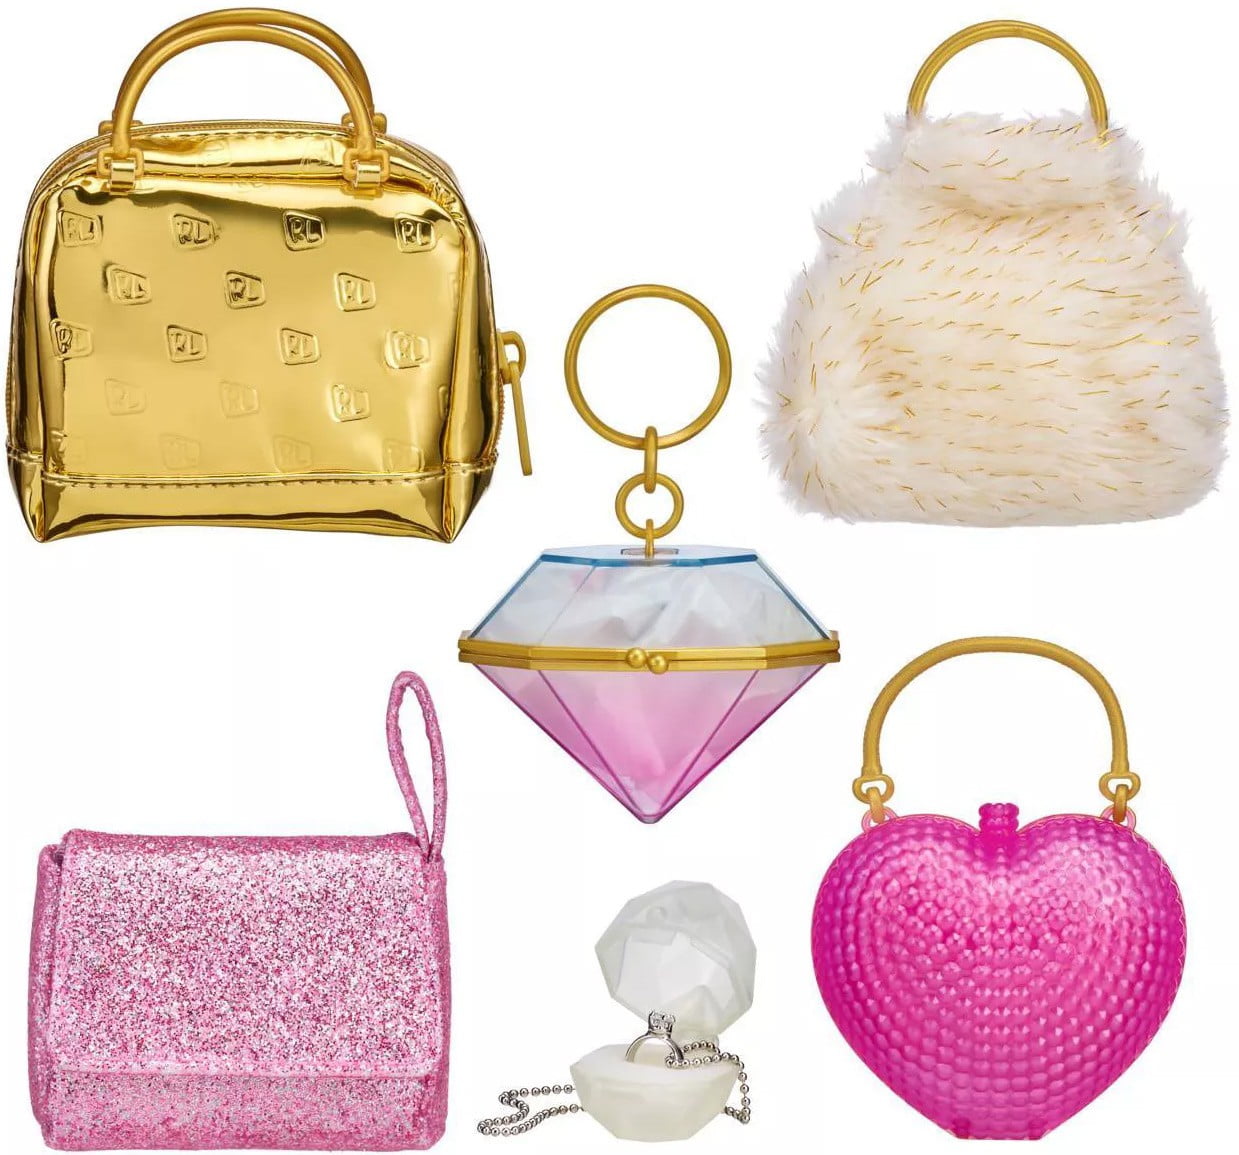 Buy REAL LITTLES - Collectible Micro Handbag with 6 Beauty